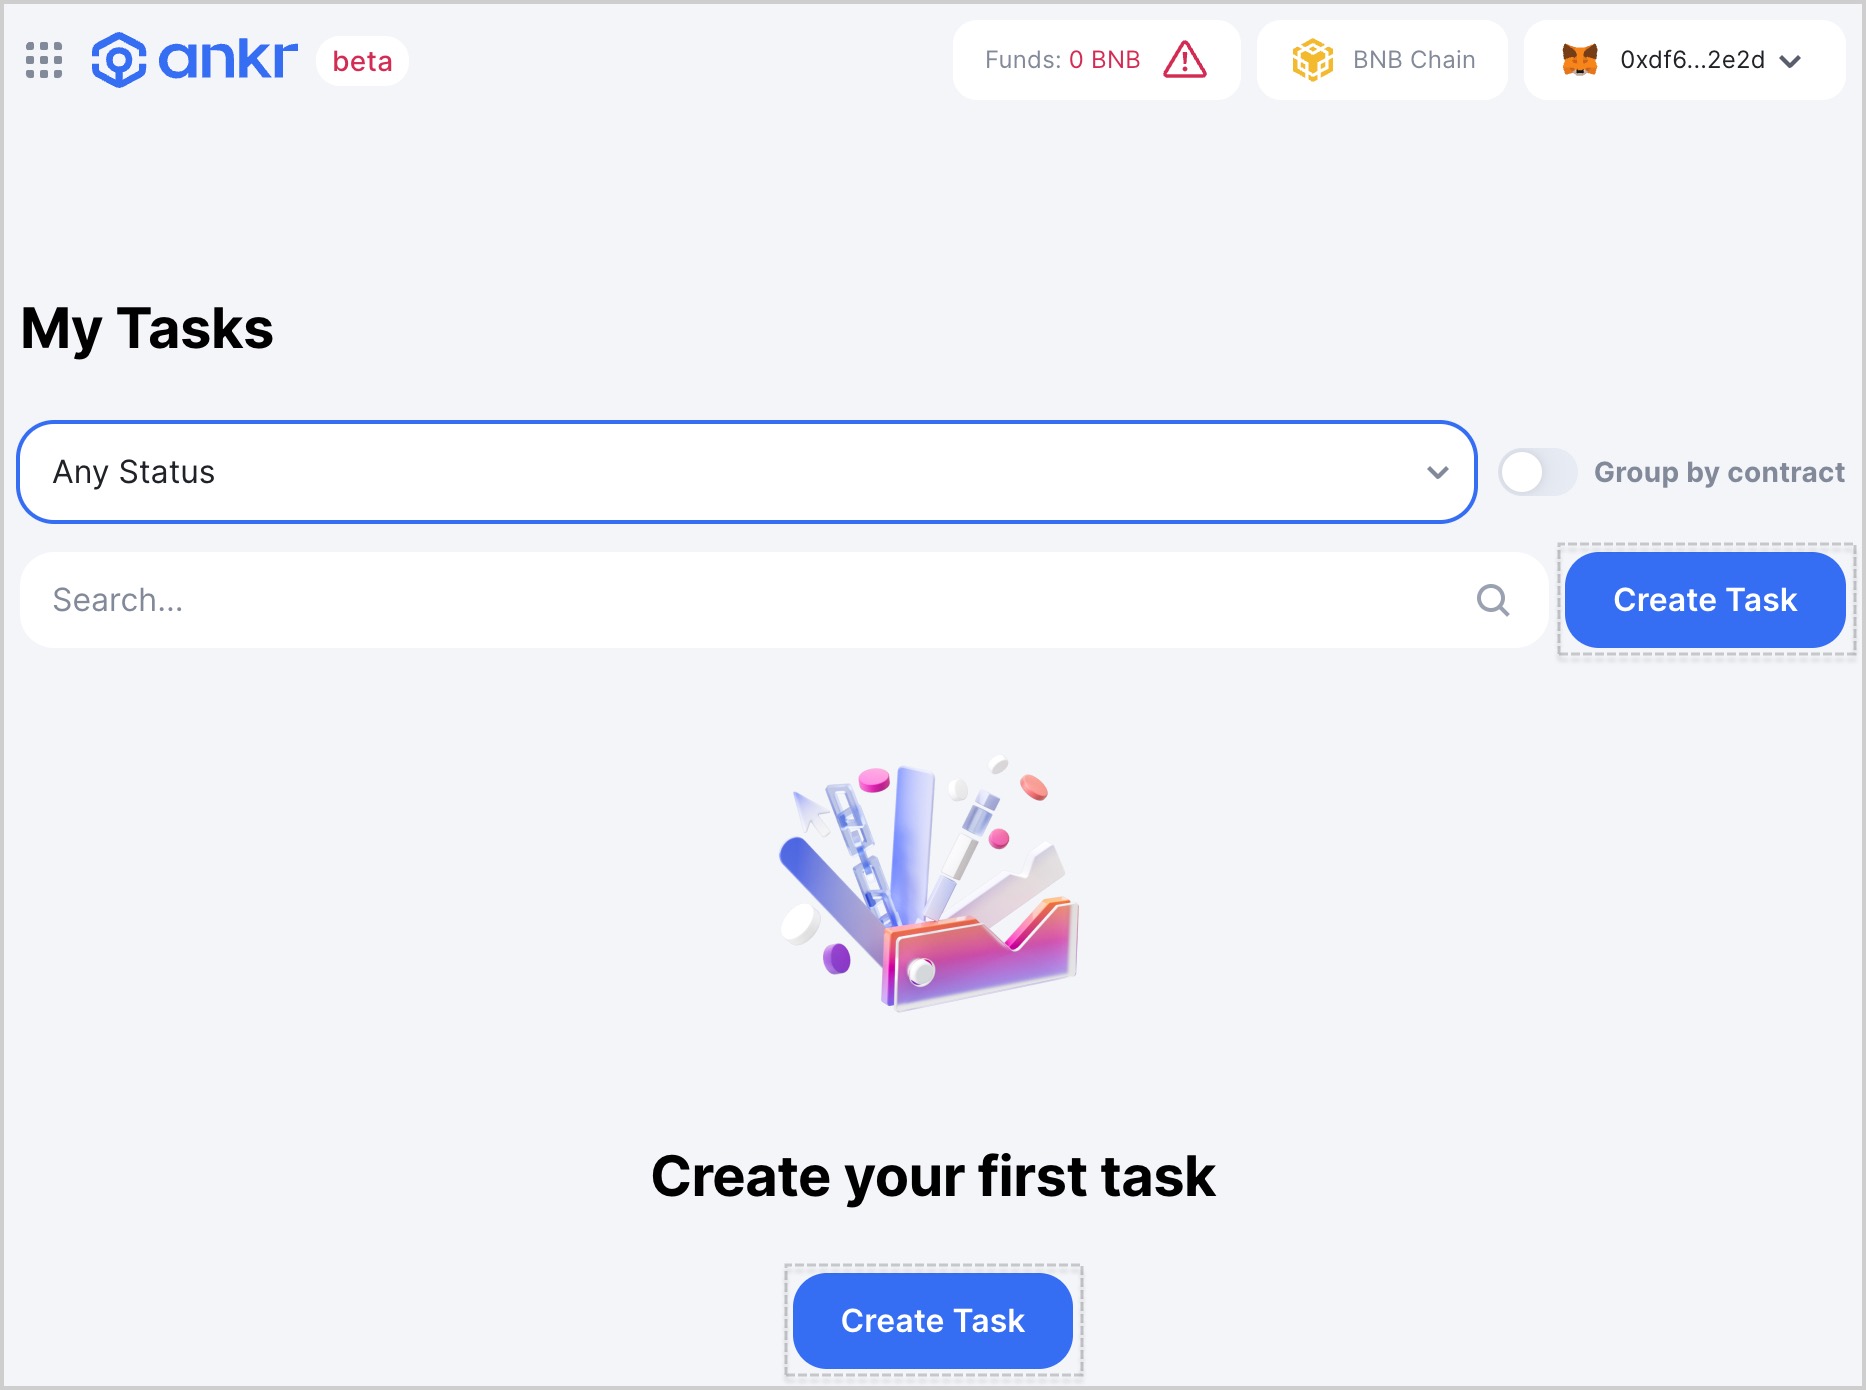 Click Create Task